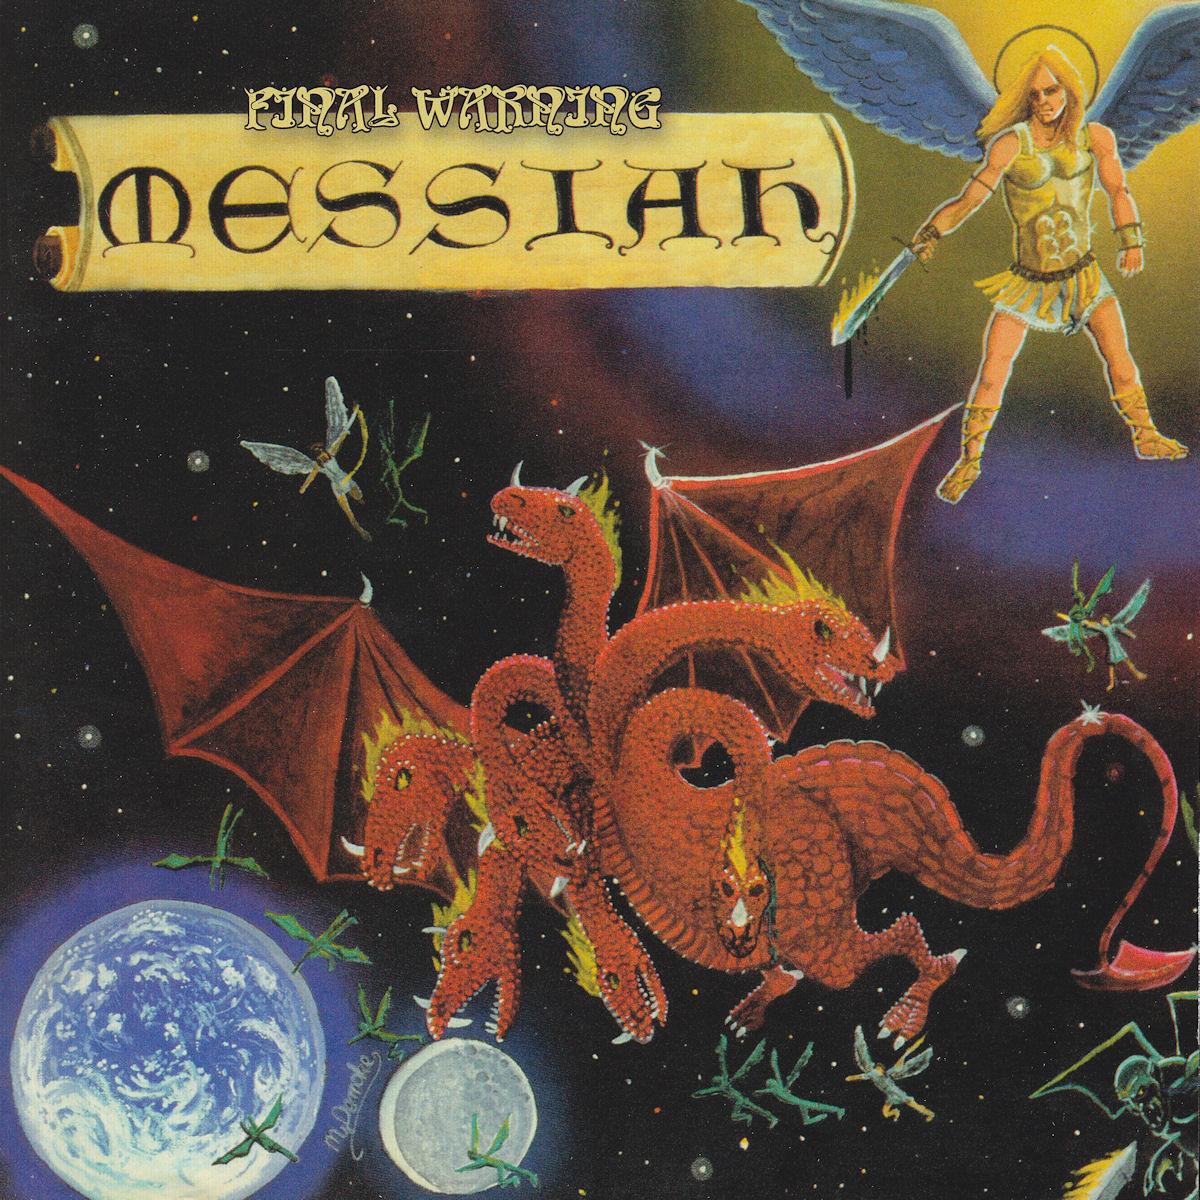 Messiah - Final Warning (1984, Heavy Metal) - Download for free via